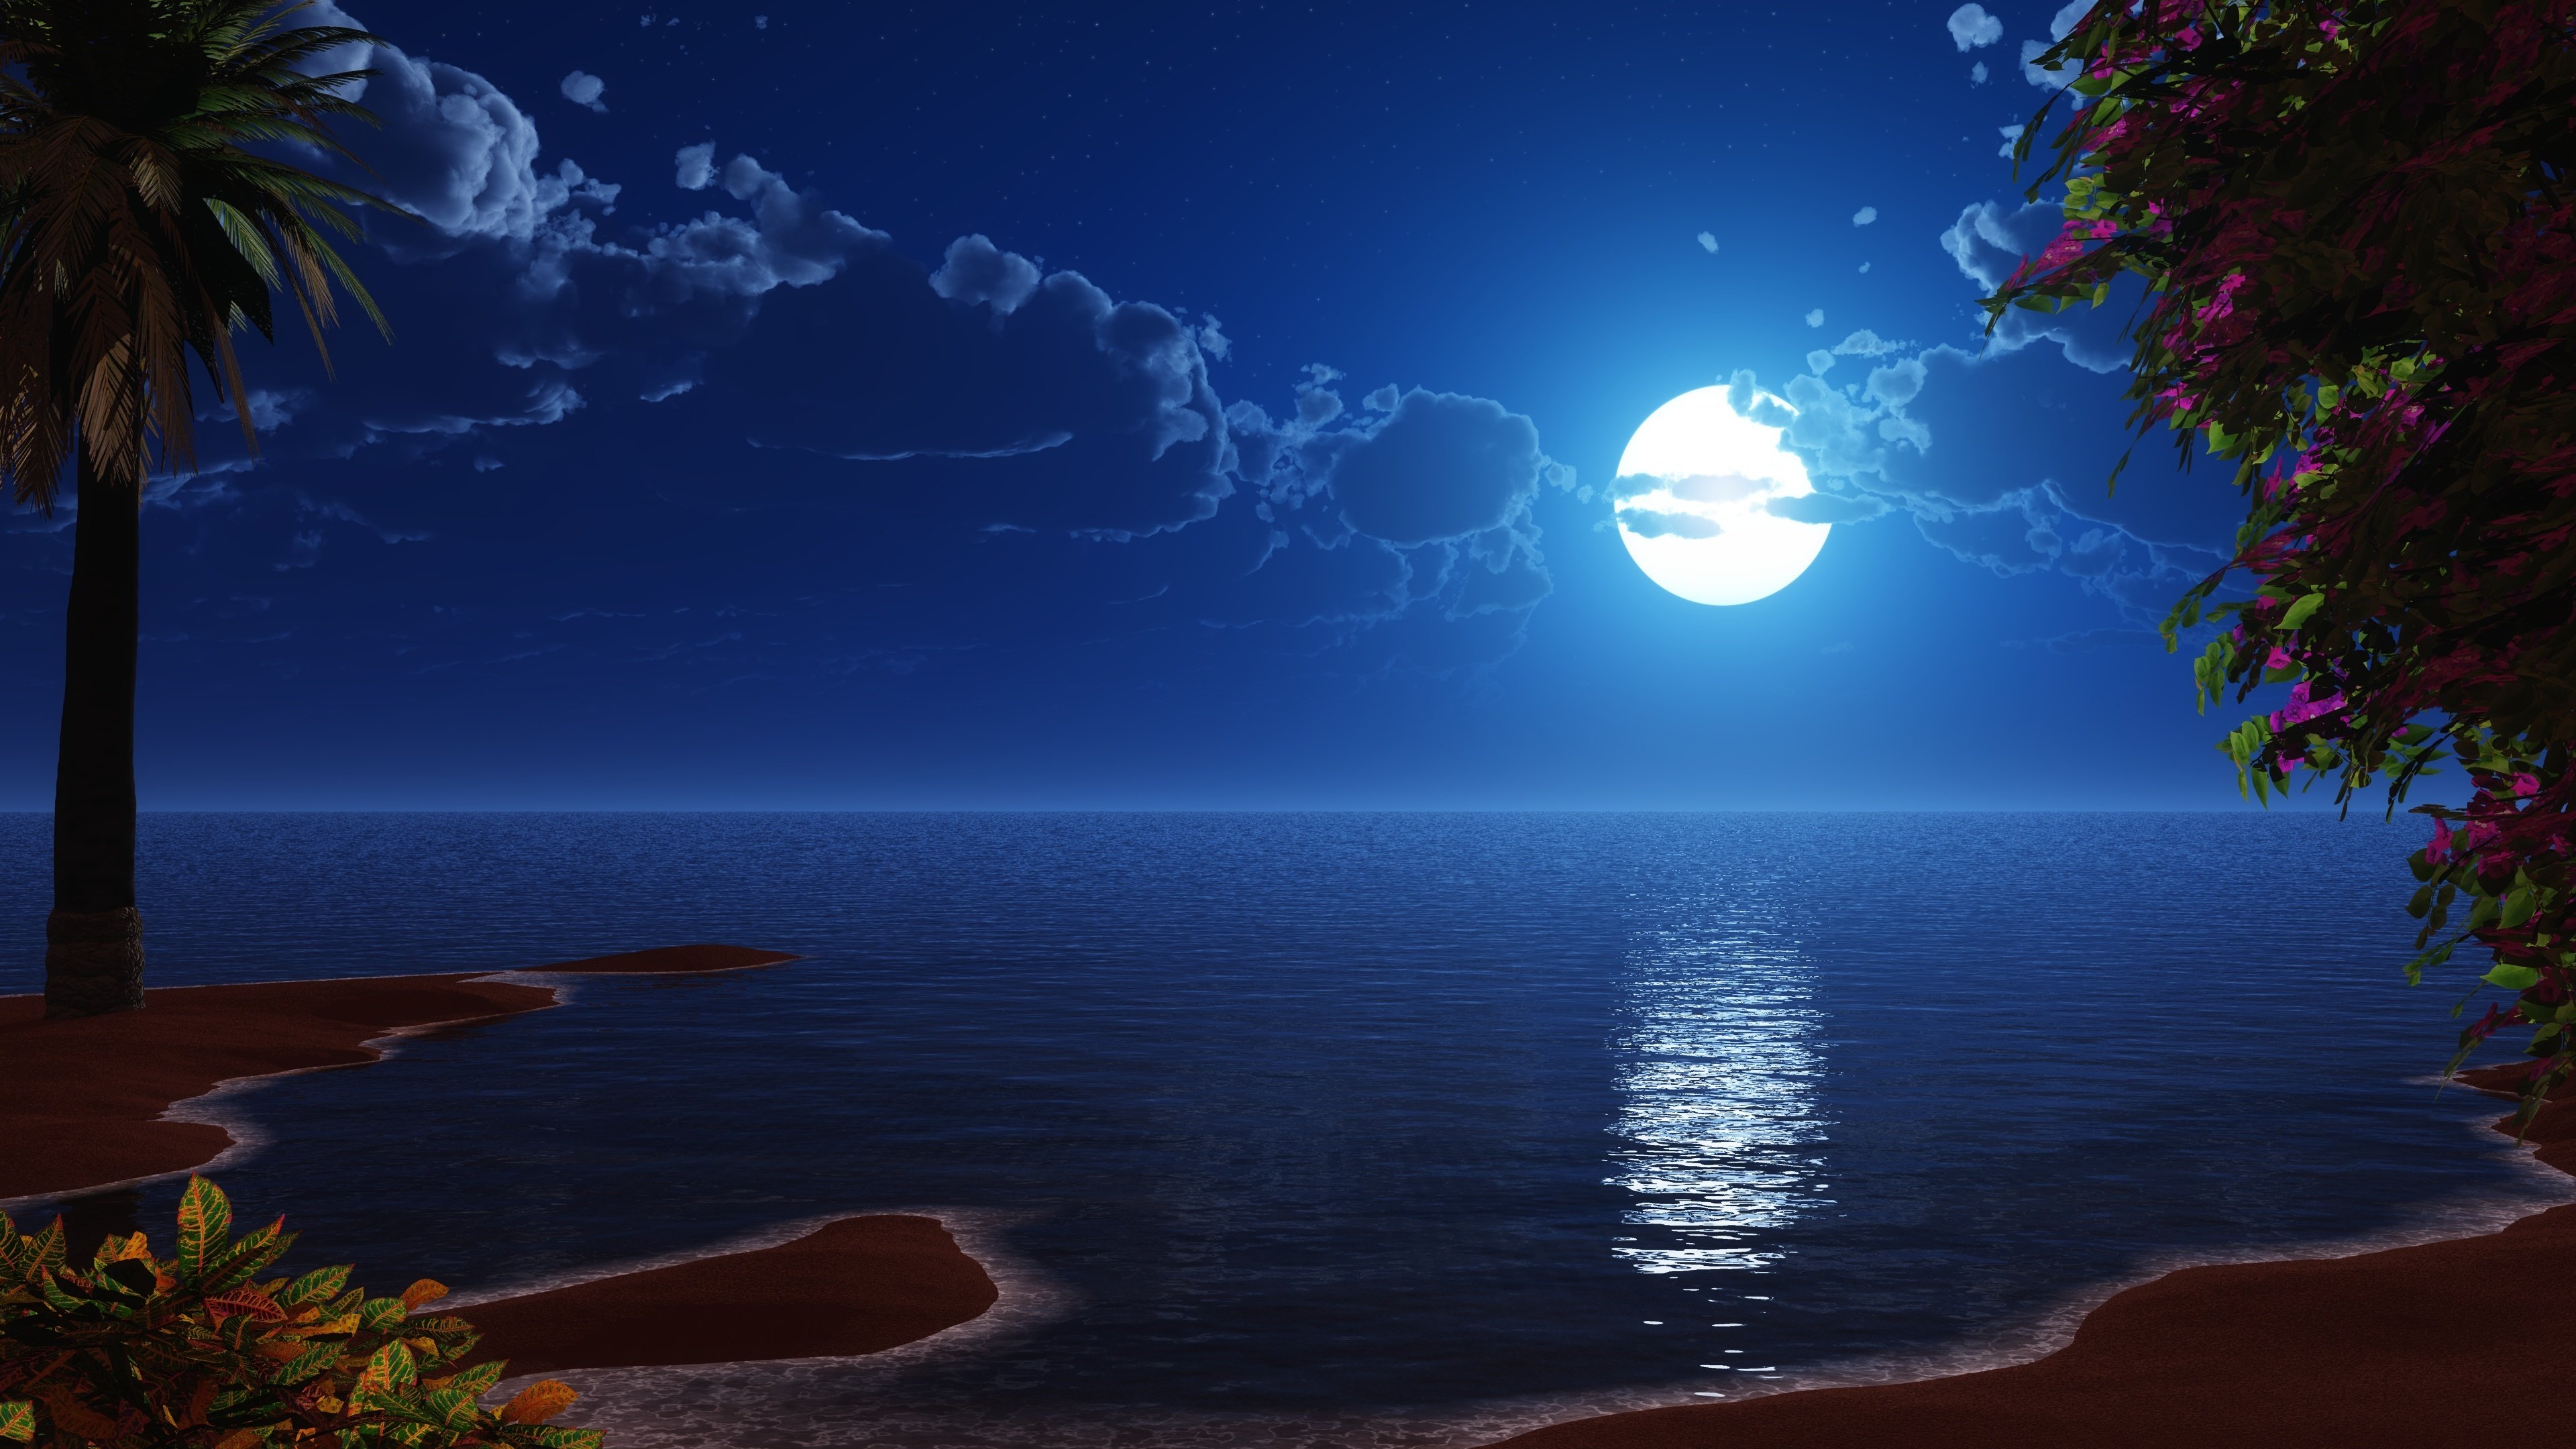 Download 3840x2400 wallpaper tropical beach, coast, full moon, night